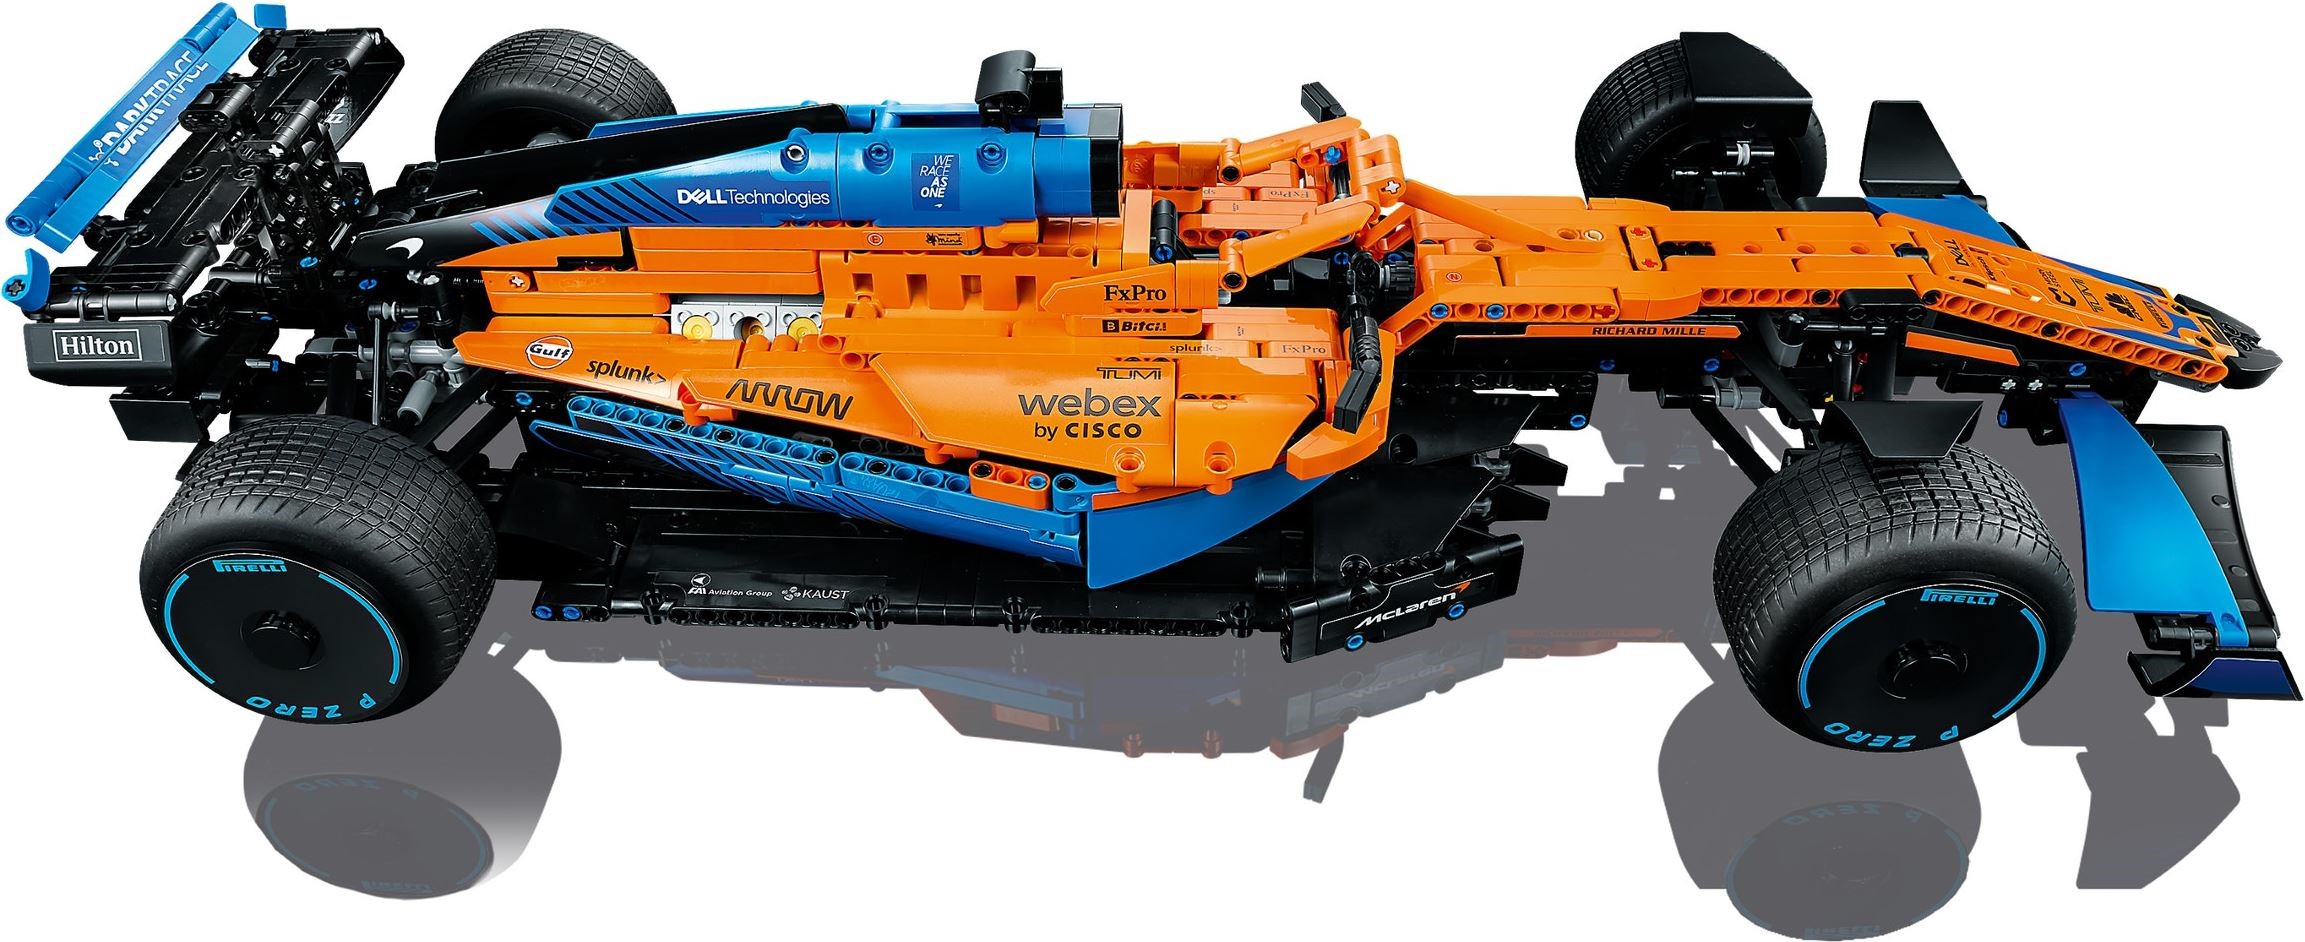 Building a life-size LEGO® Technic McLaren Formula 1 Race Car